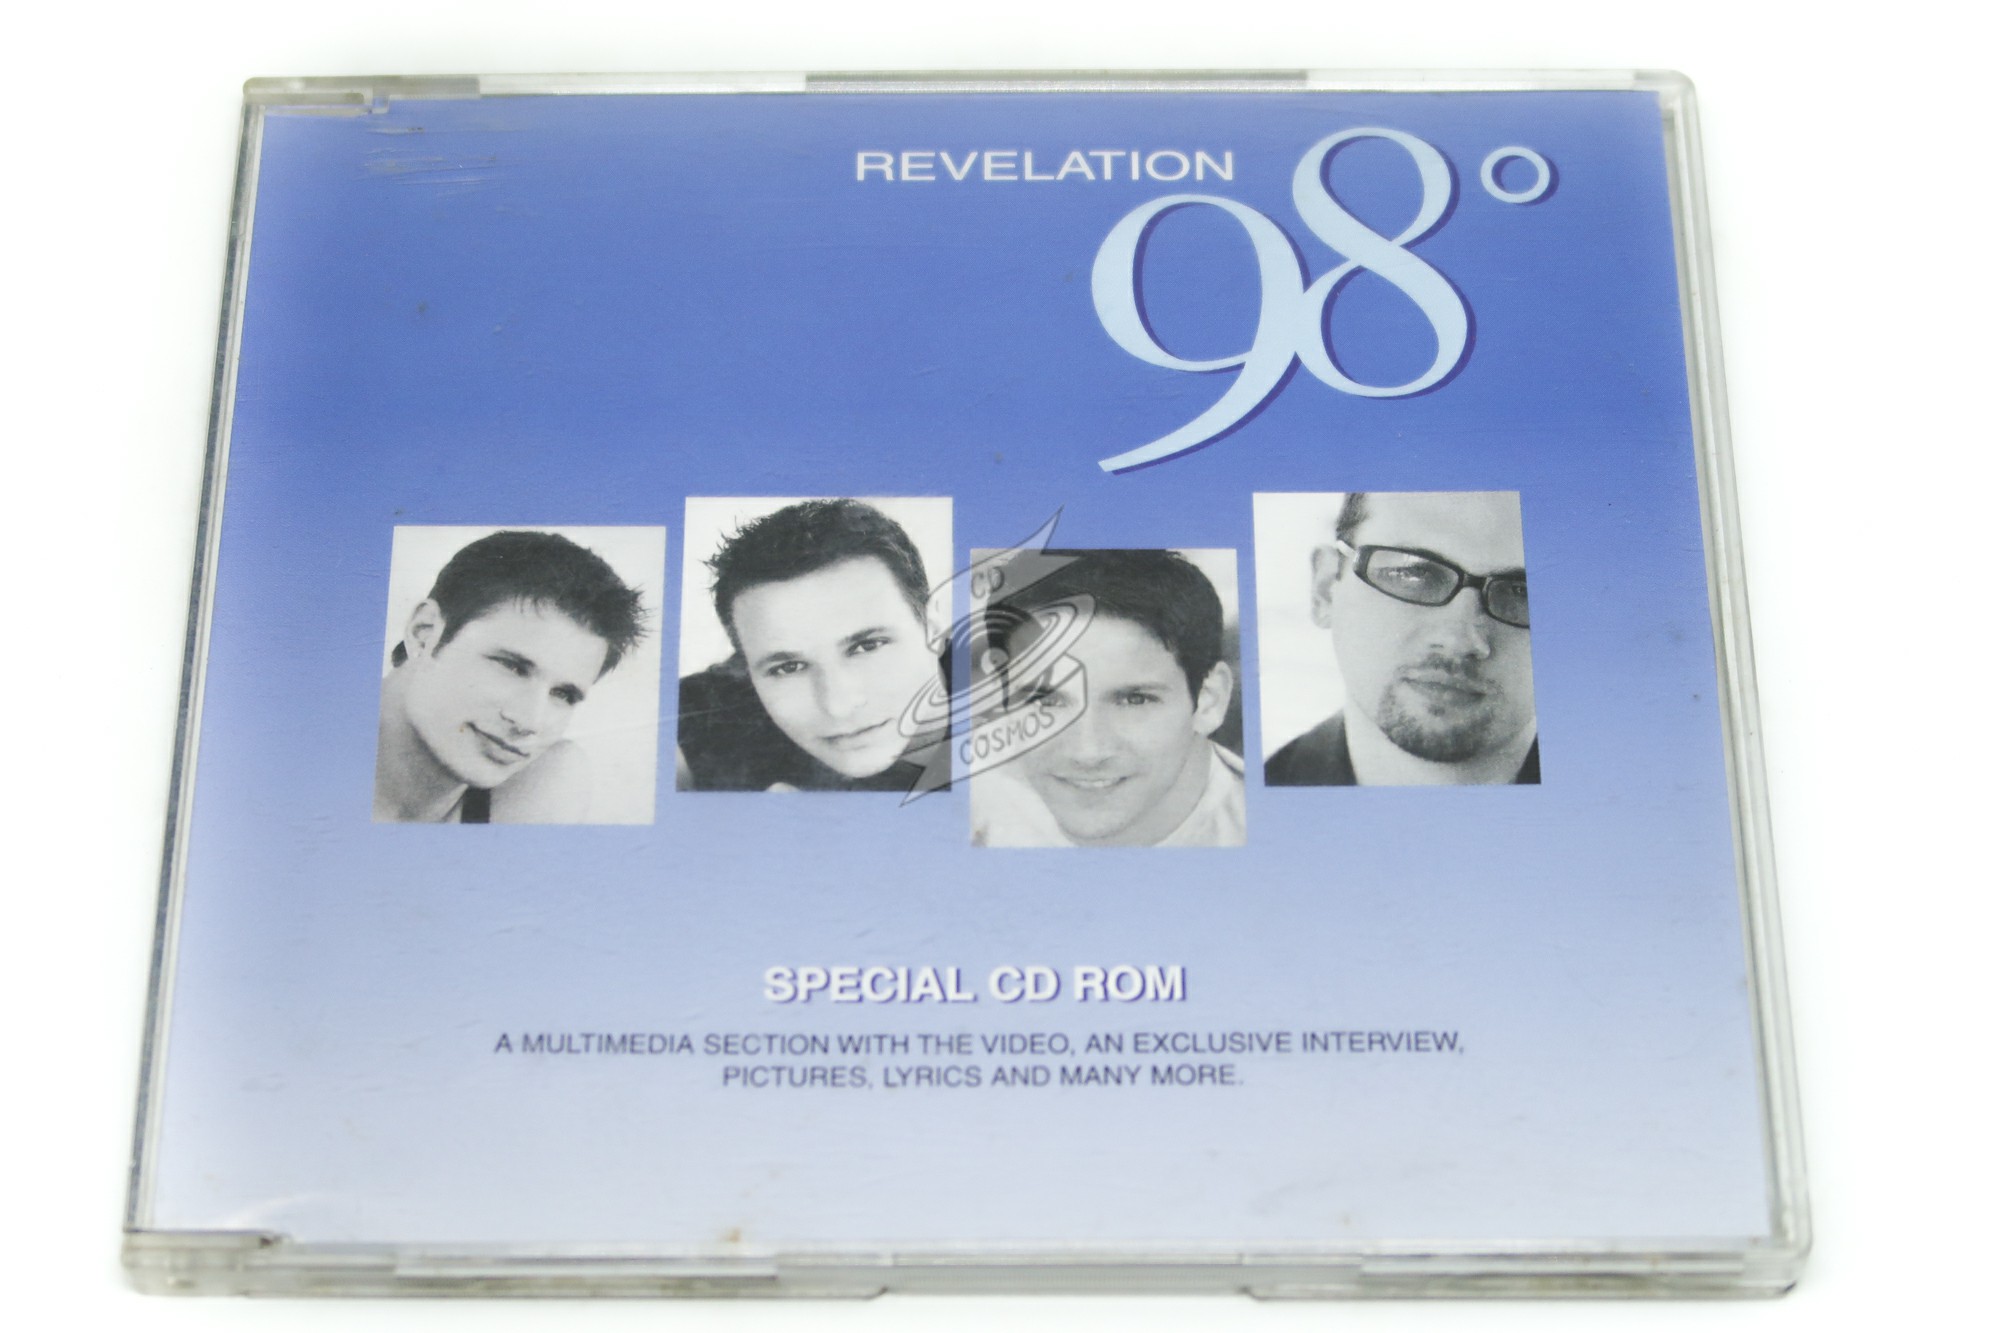 98 Degrees - Revelation CD - cds / dvds / vhs - by owner